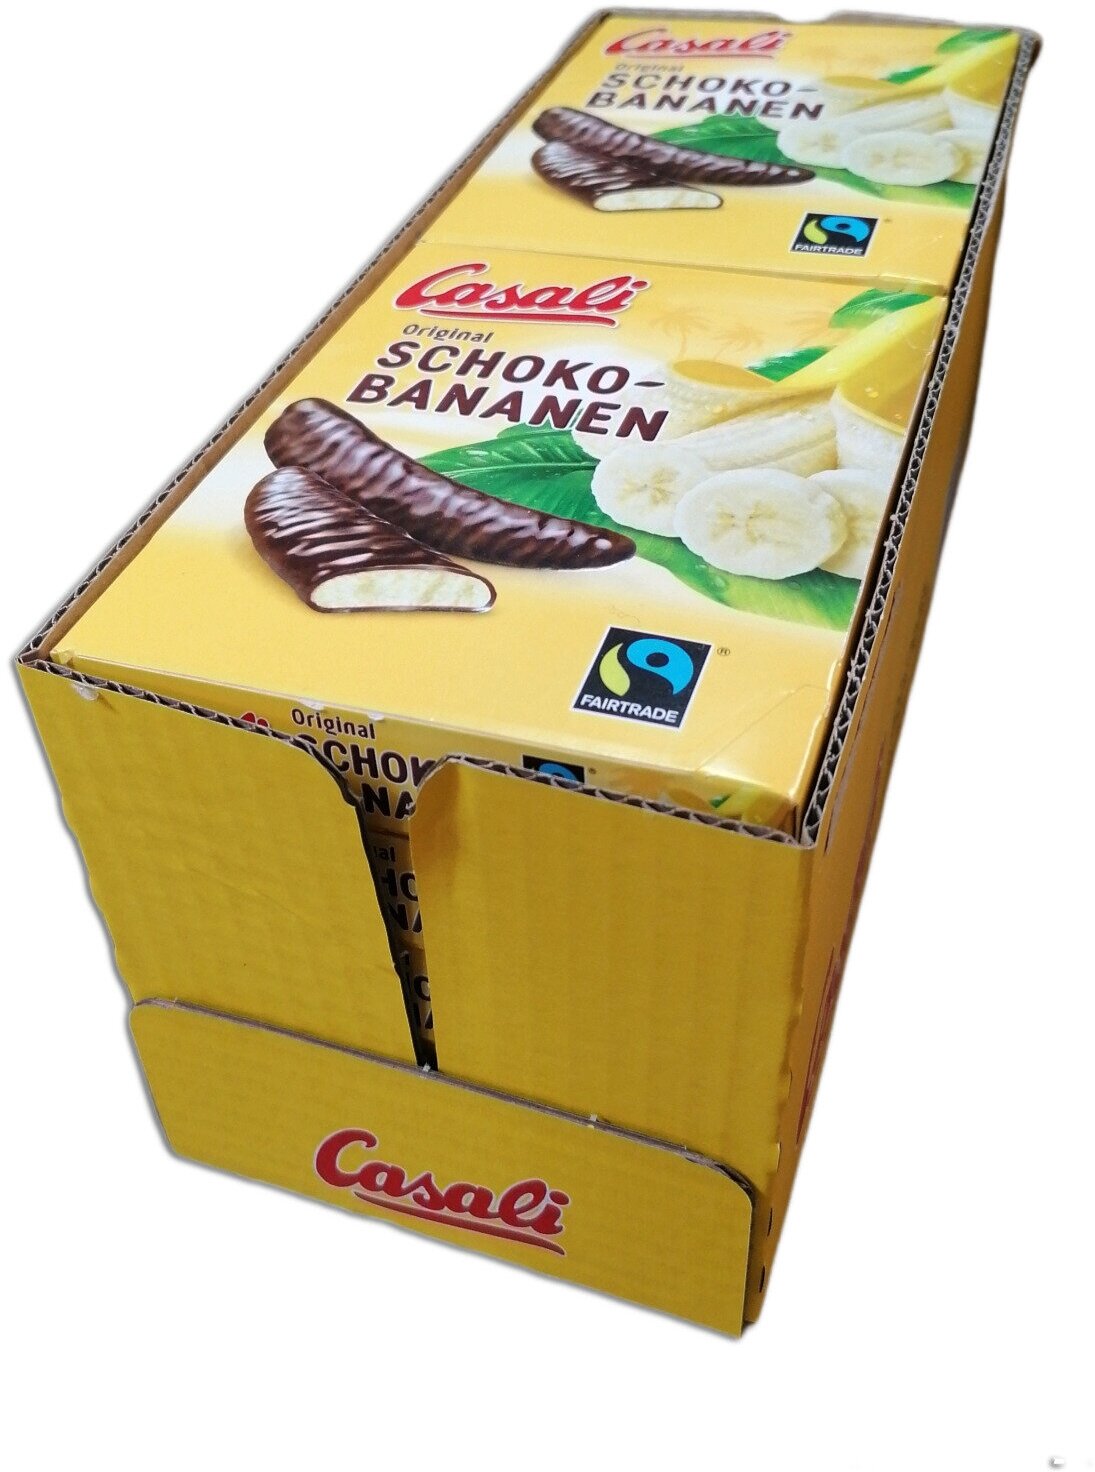 Casali Schoko-Bananen суфле банановое в шоколаде, 10 шт по 150 г